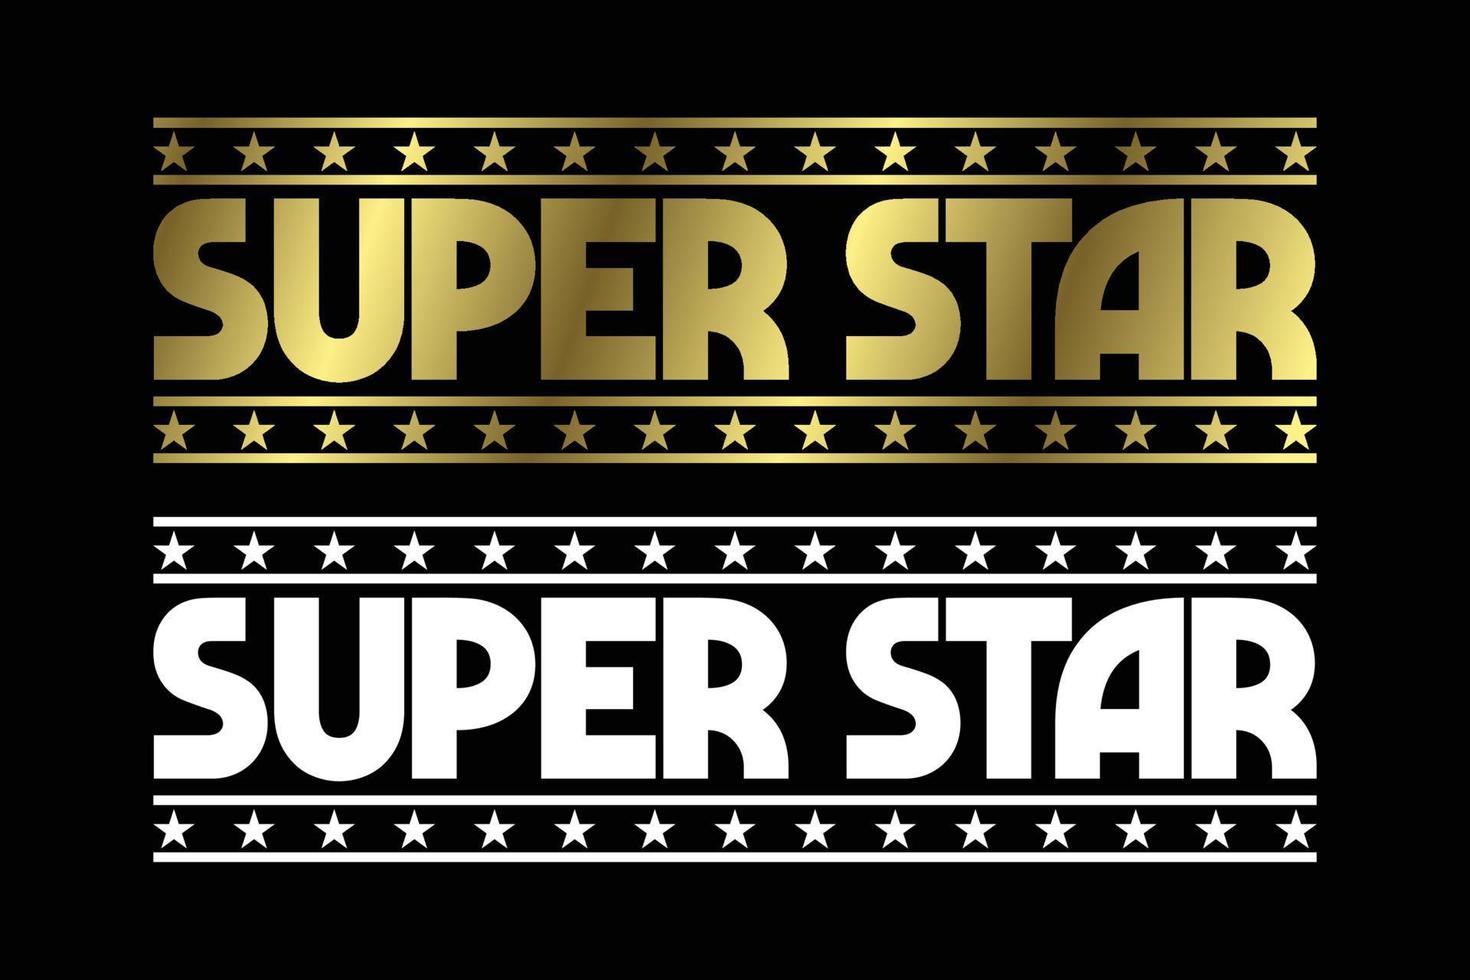 Golden Super Star Text Logo Sign Symbol. Vector illustration graphic element on the dark background